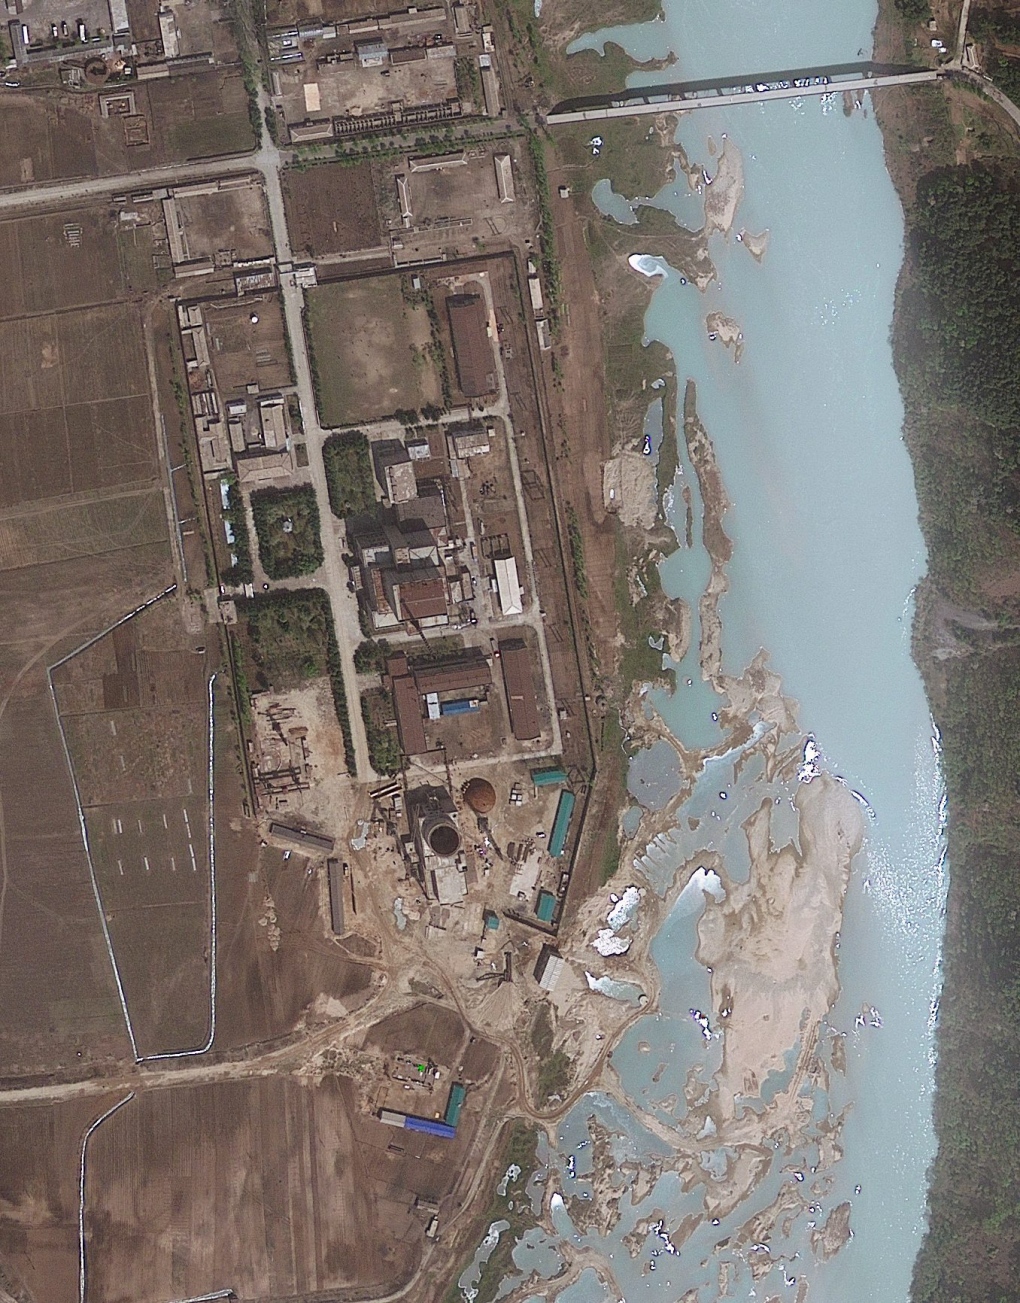 Nyongbyon nuclear facility in North Korea